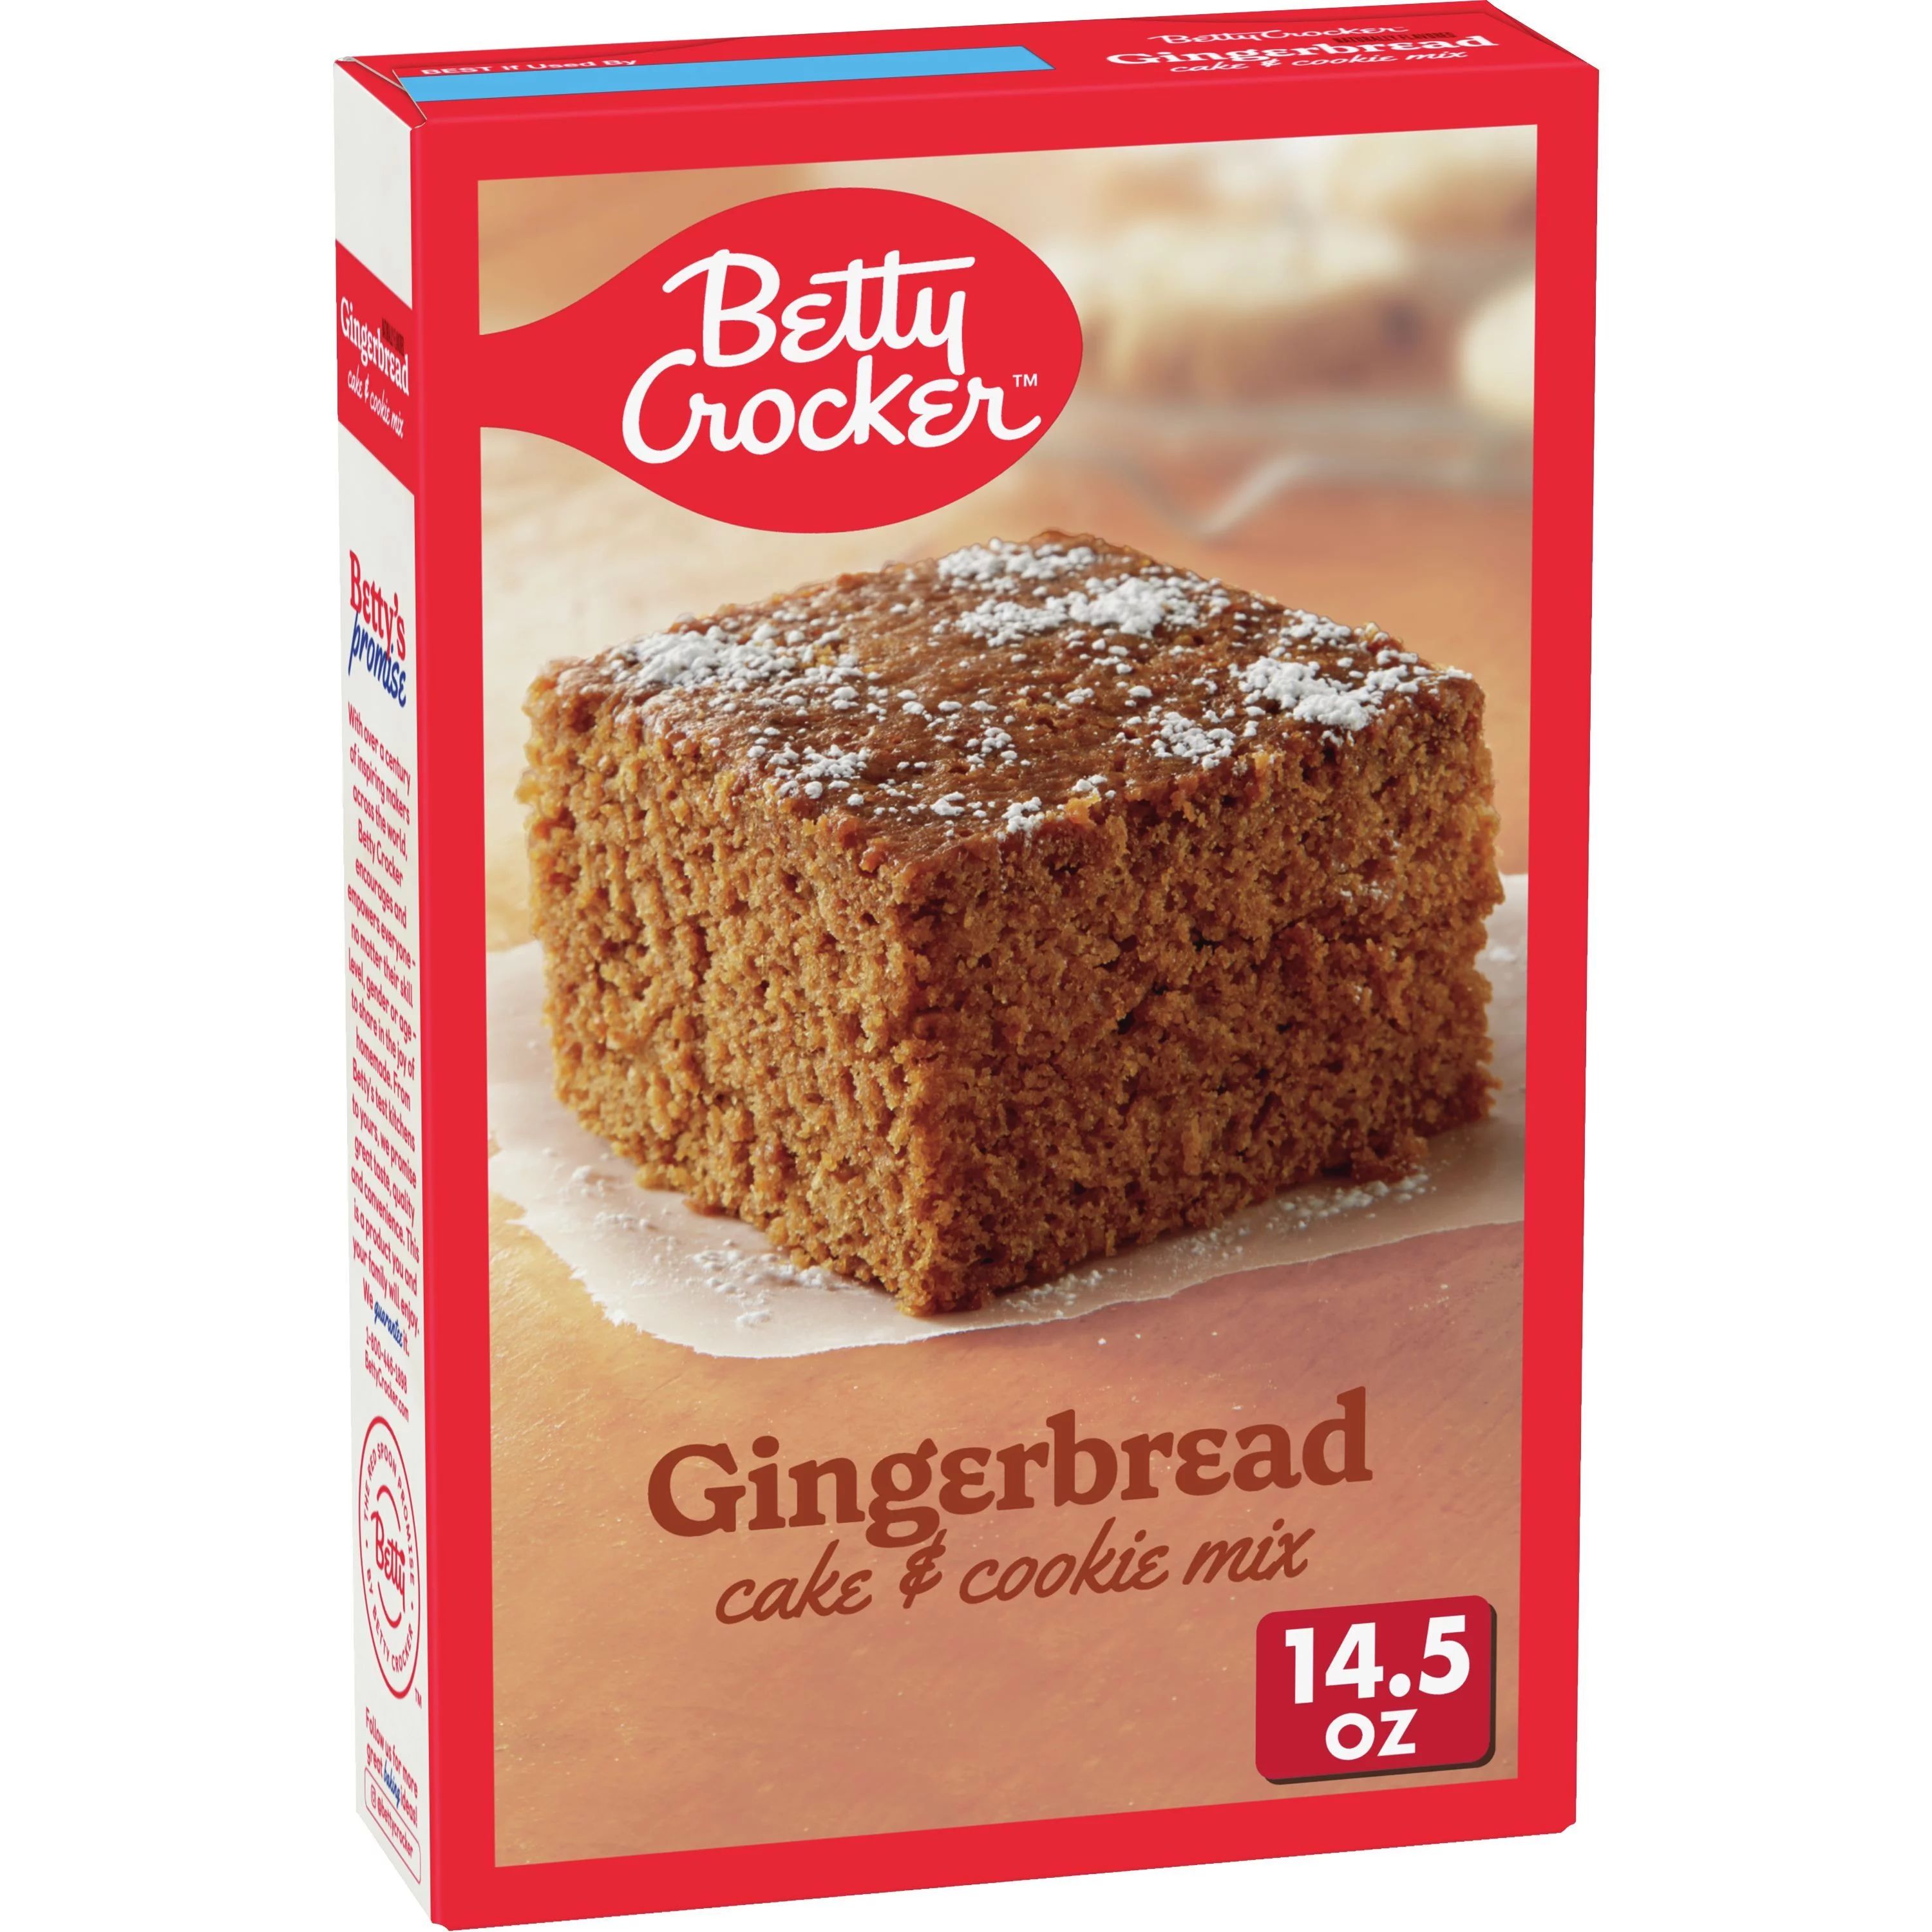 Betty Crocker Gingerbread Cake and Cookie Mix, 14.5 oz. | Walmart (US)